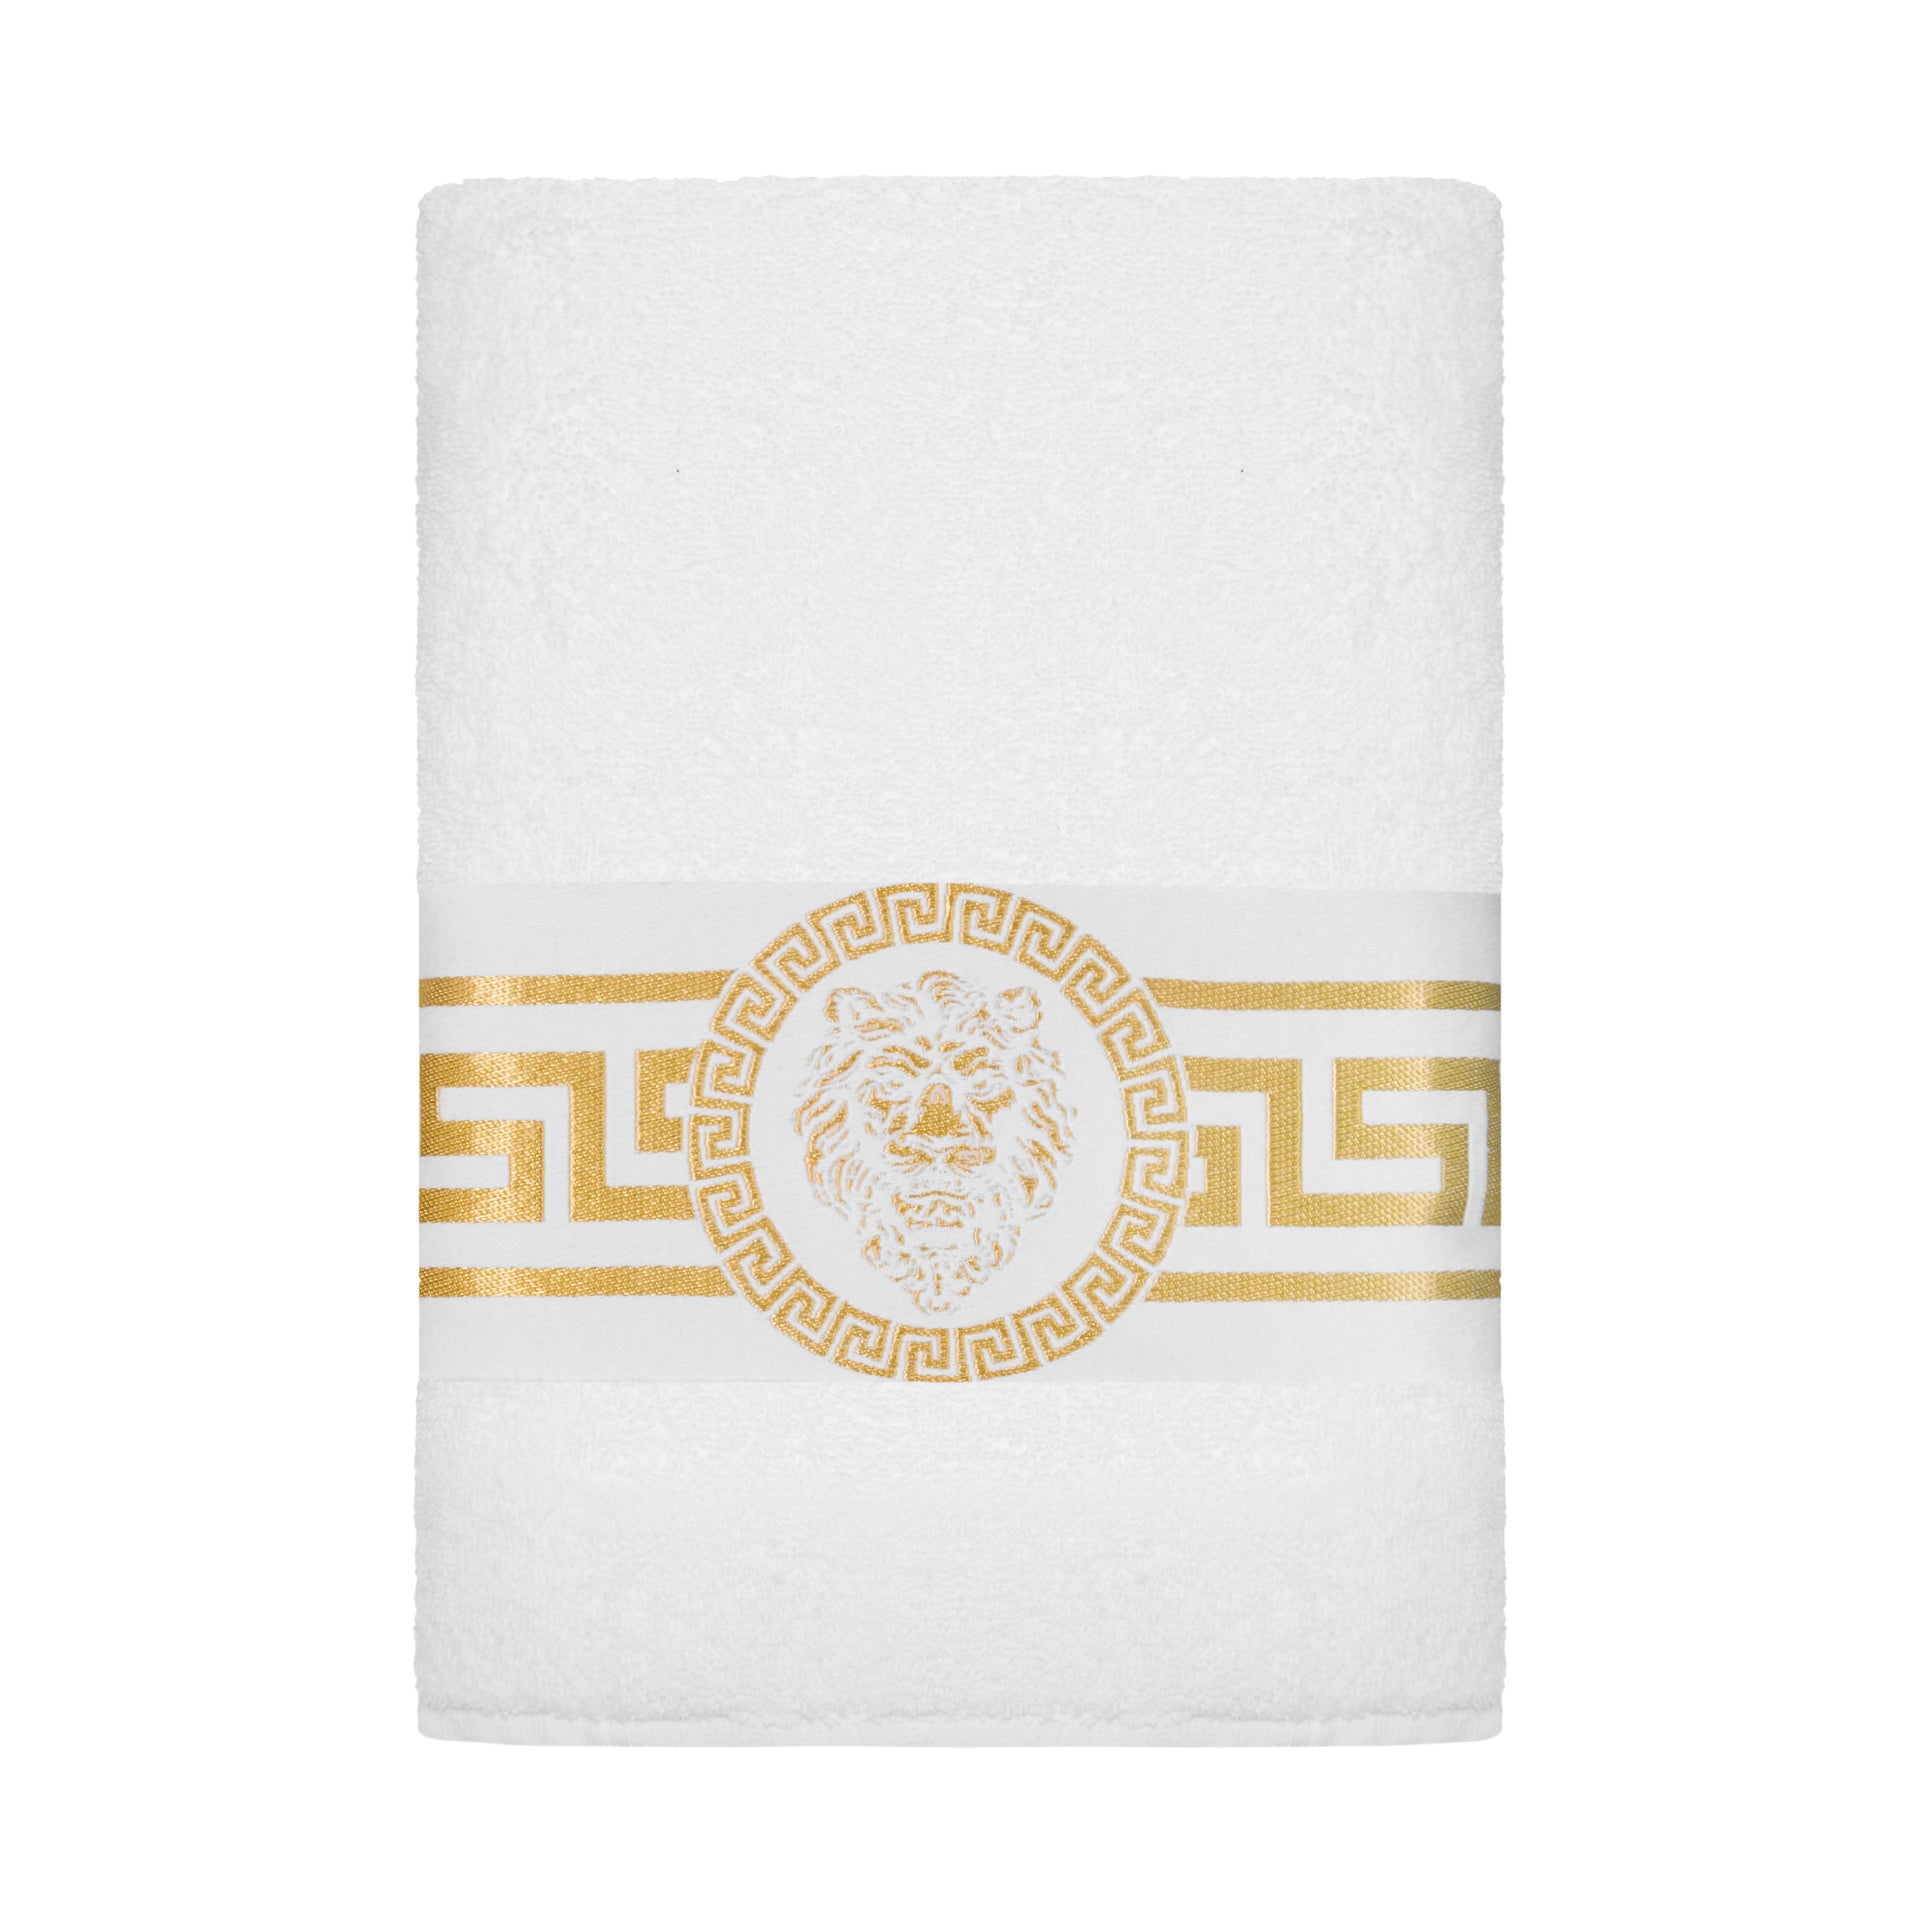 Meander Lion Towels White Gold